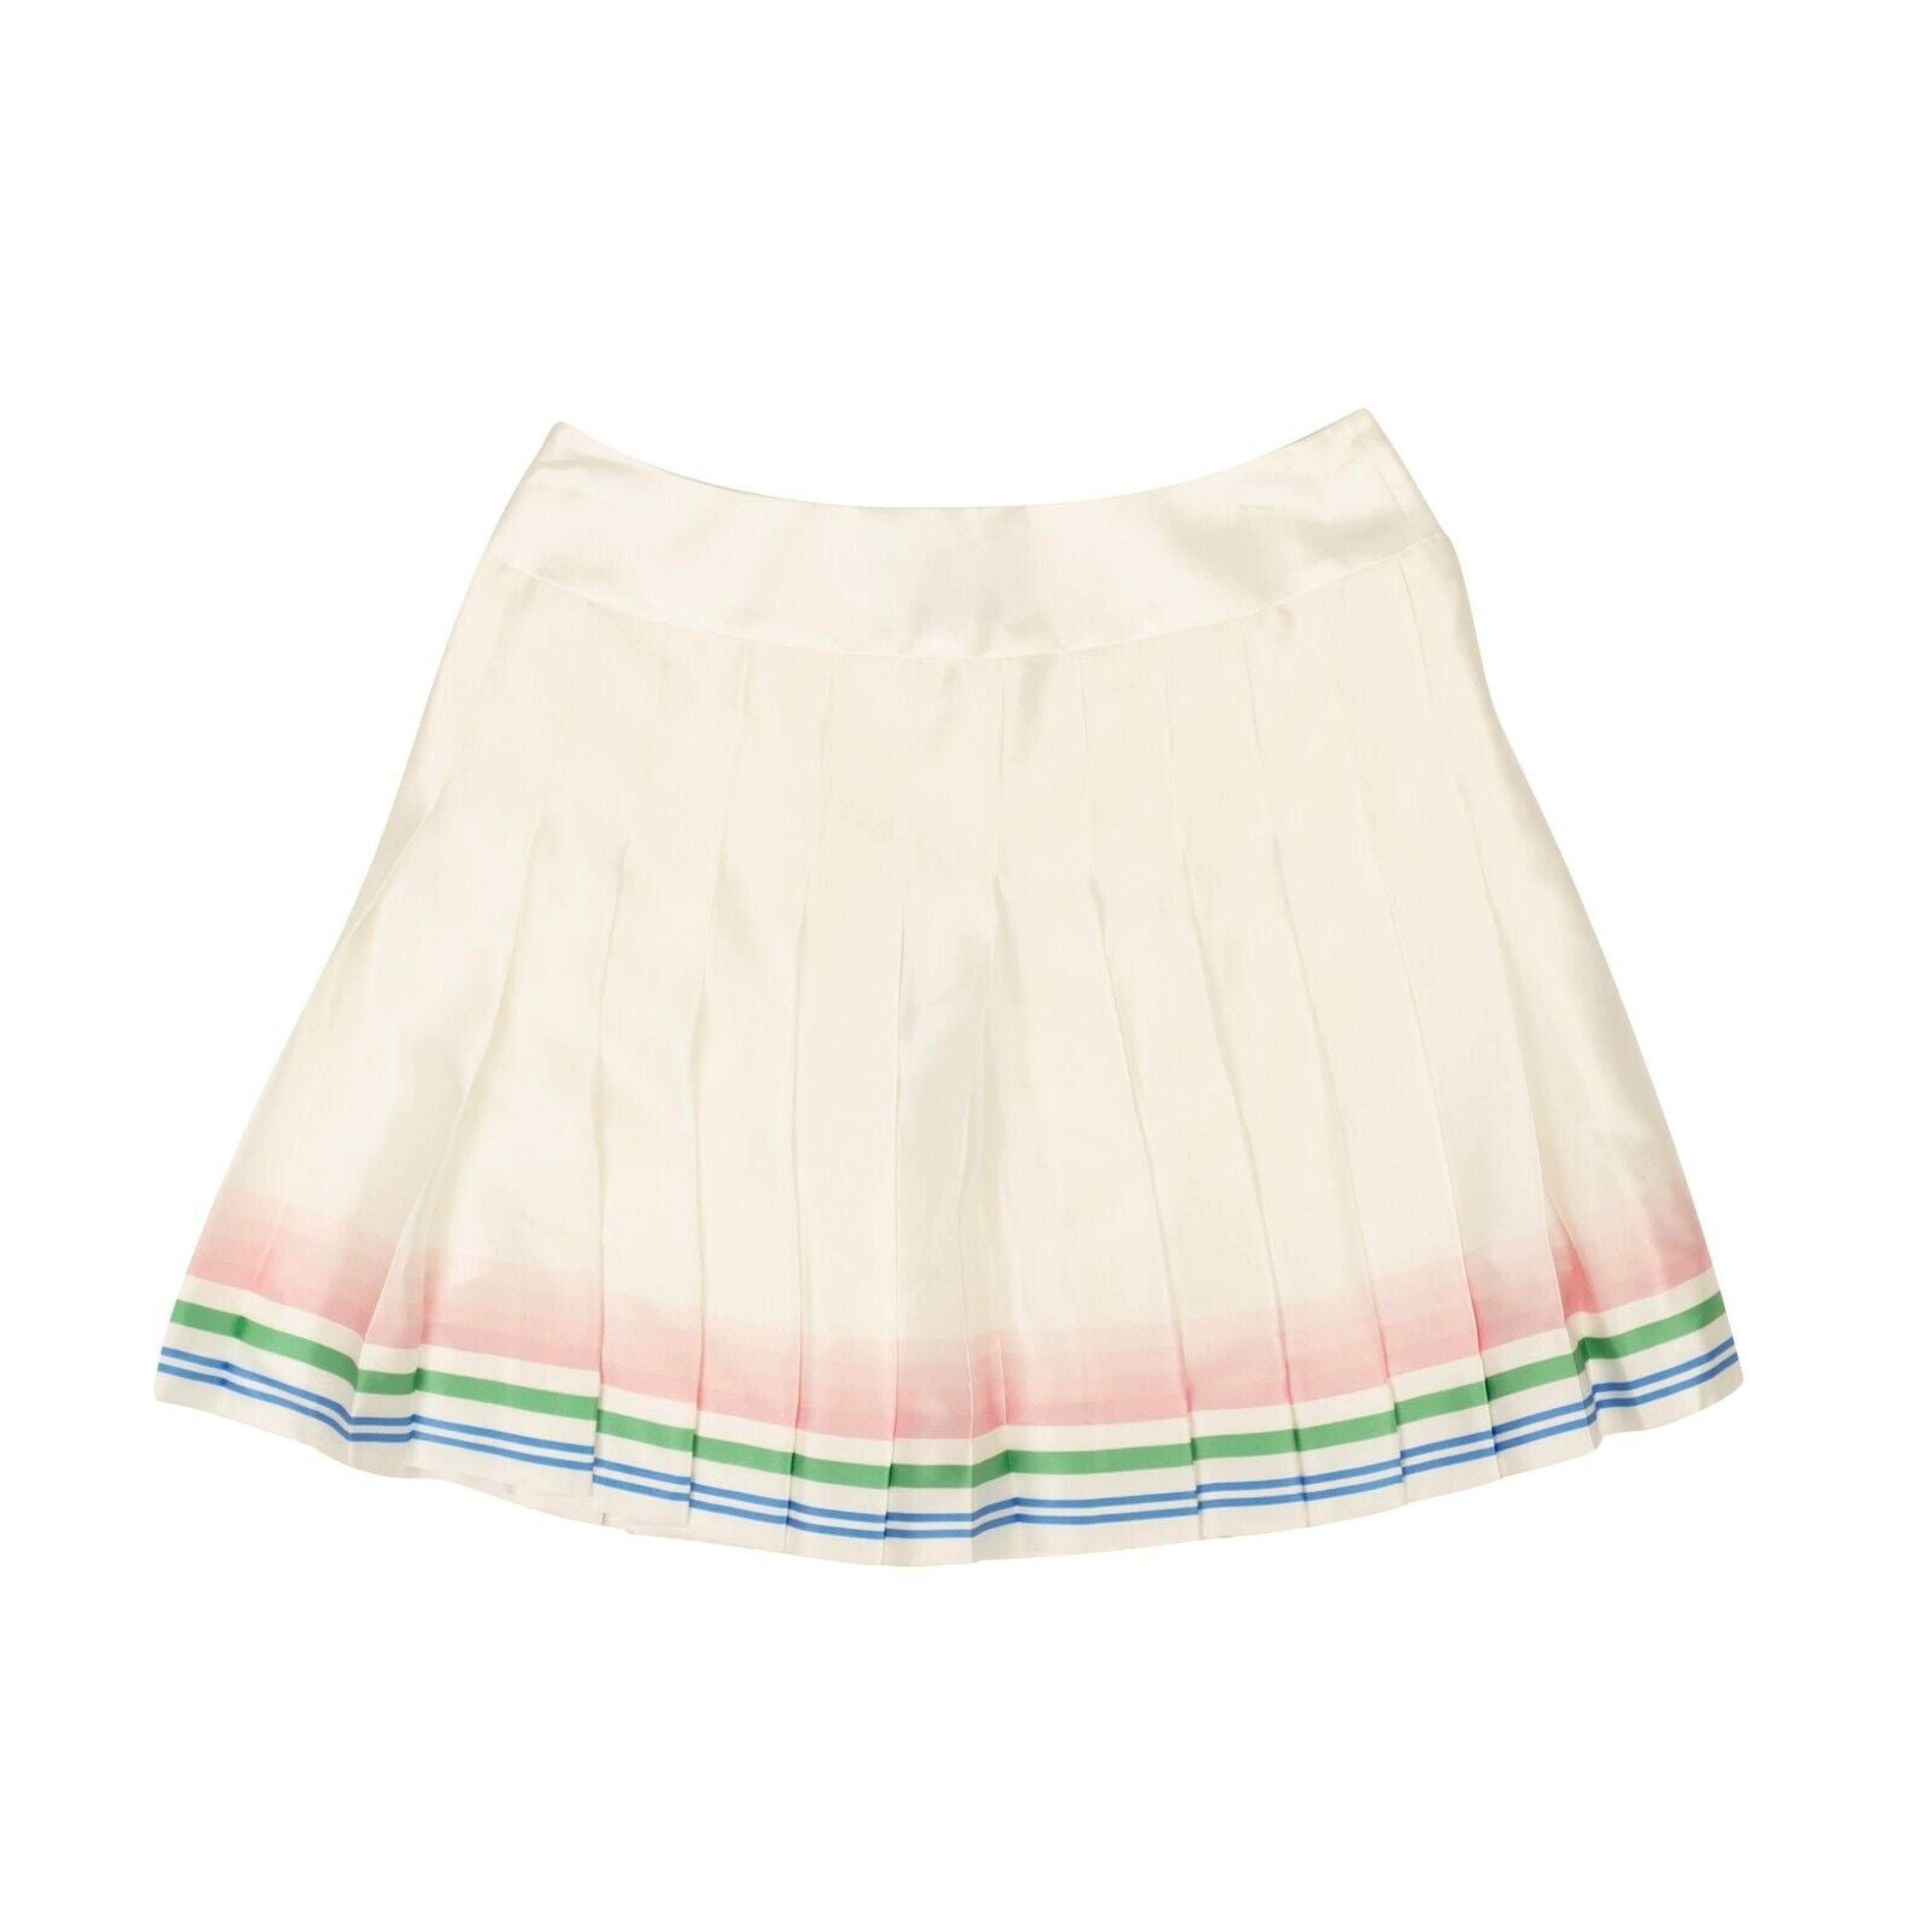 Alternate View 2 of White Satin Pleated Tennis Club Mini Skirt